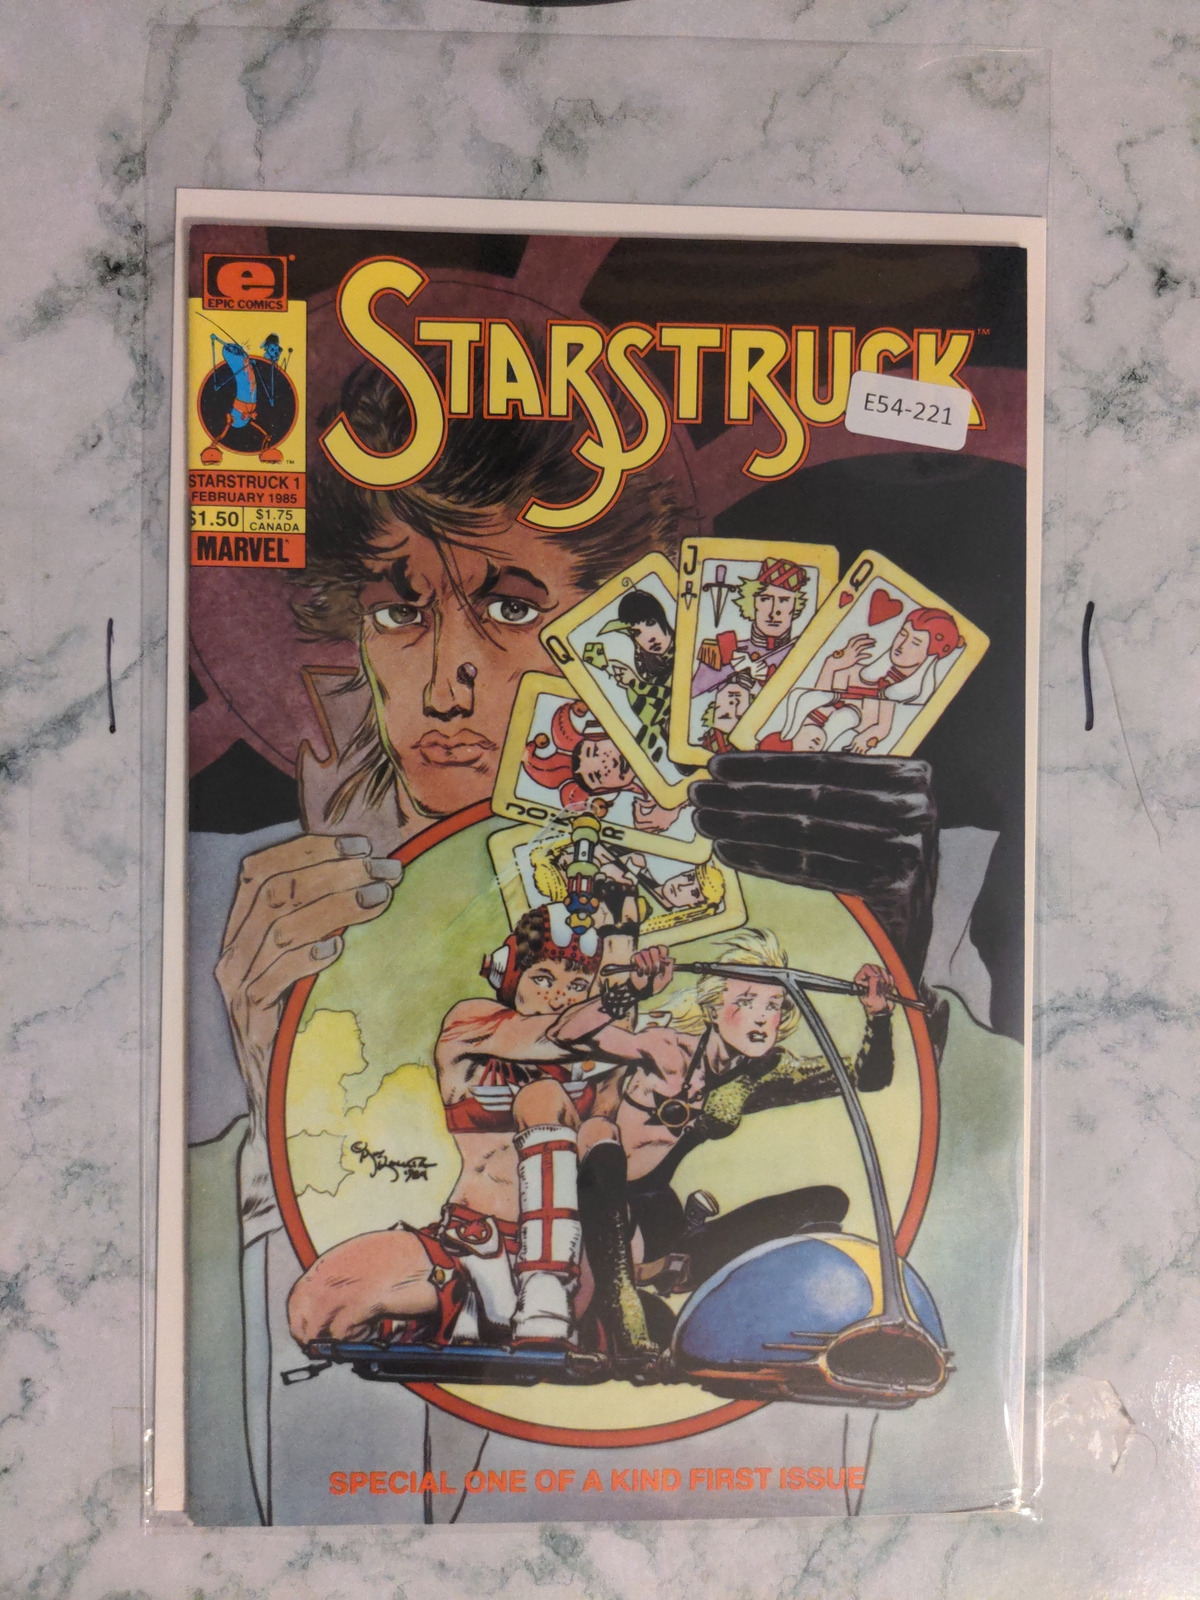 STARSTRUCK #1 VOL. 1 8.0 EPIC COMIC BOOK E54-221